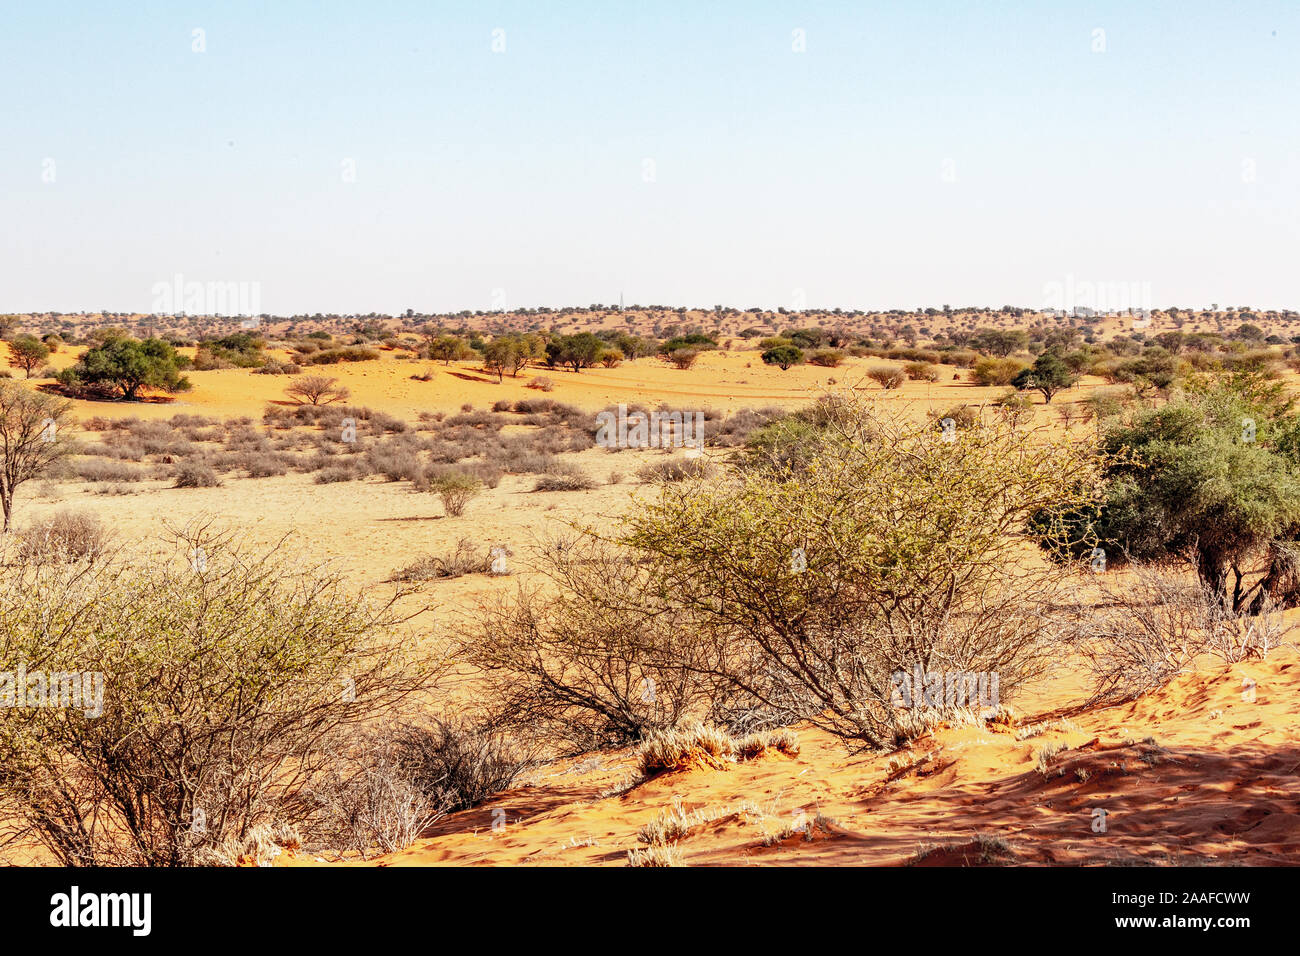 Wildlife in the Kalahari desert, Namibia, Africa Stock Photo